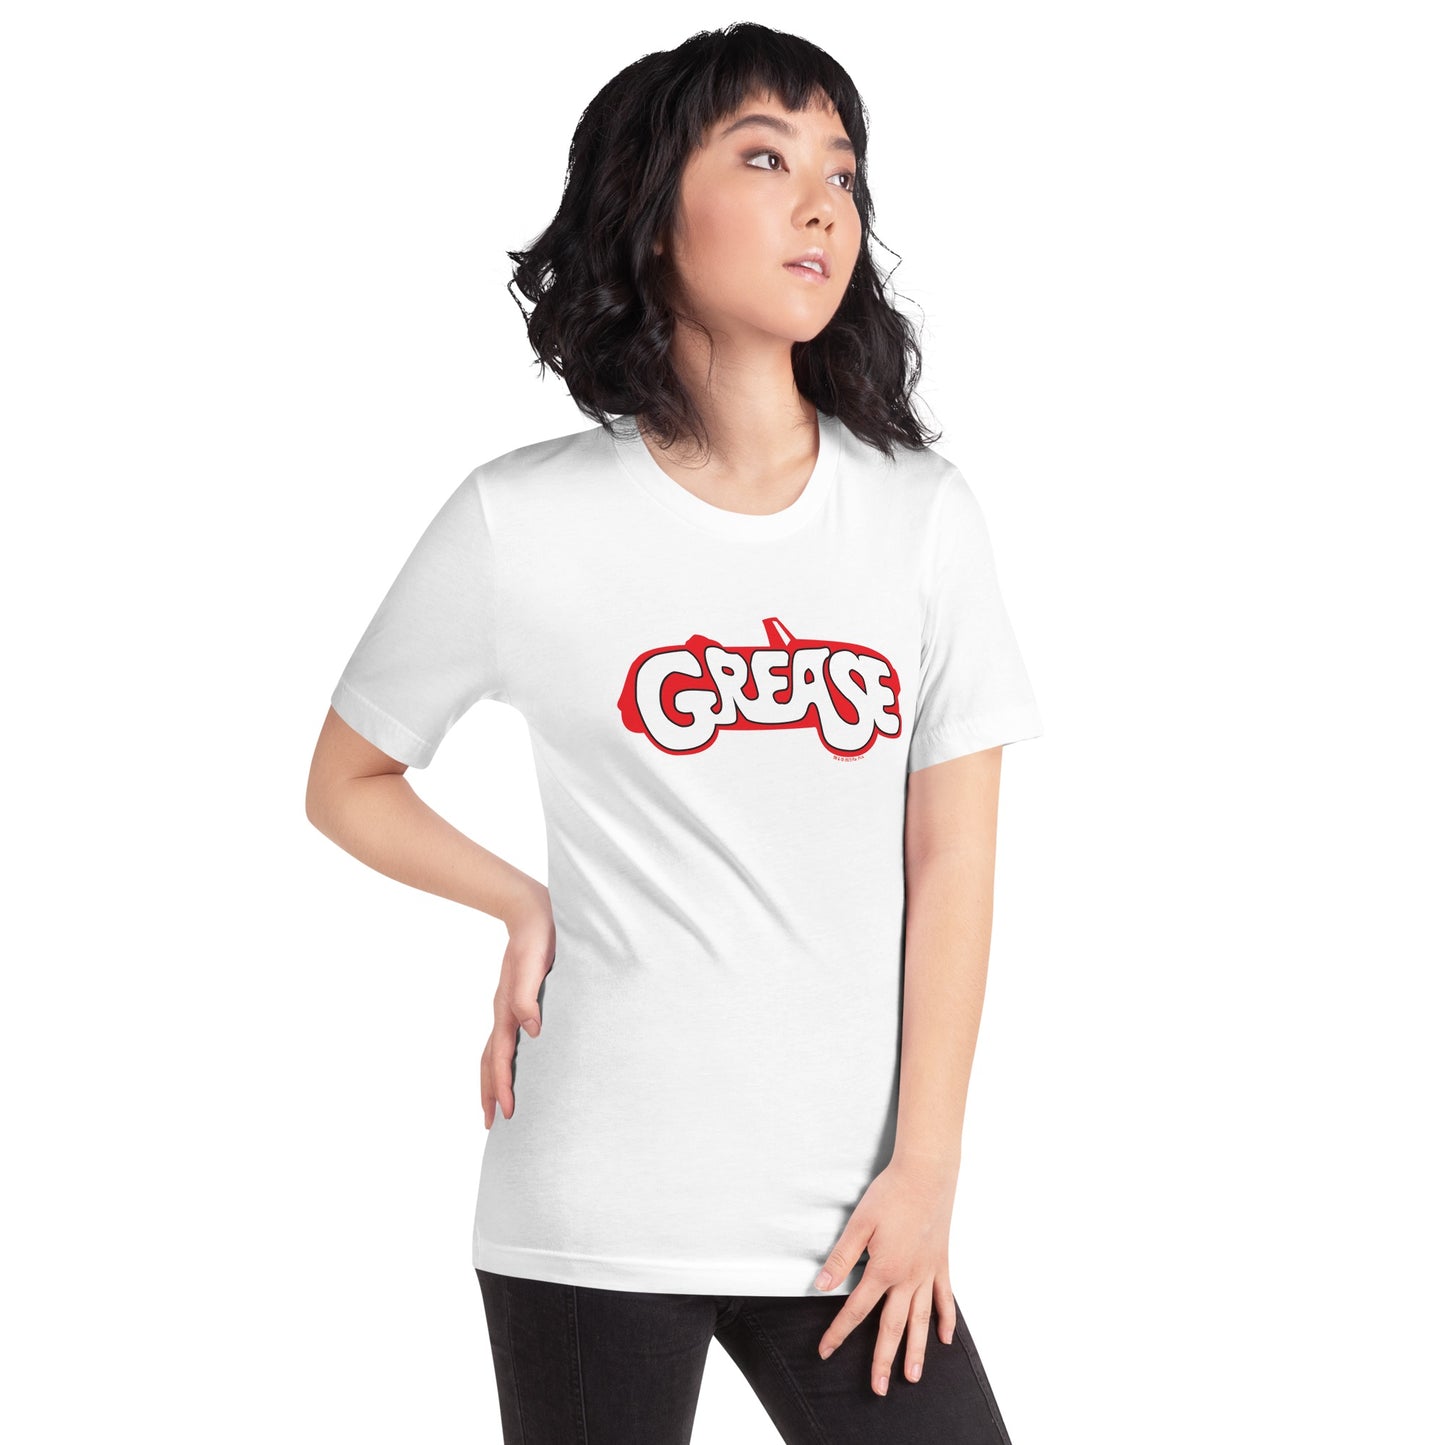 Grease Logo Adult Short Sleeve T-Shirt